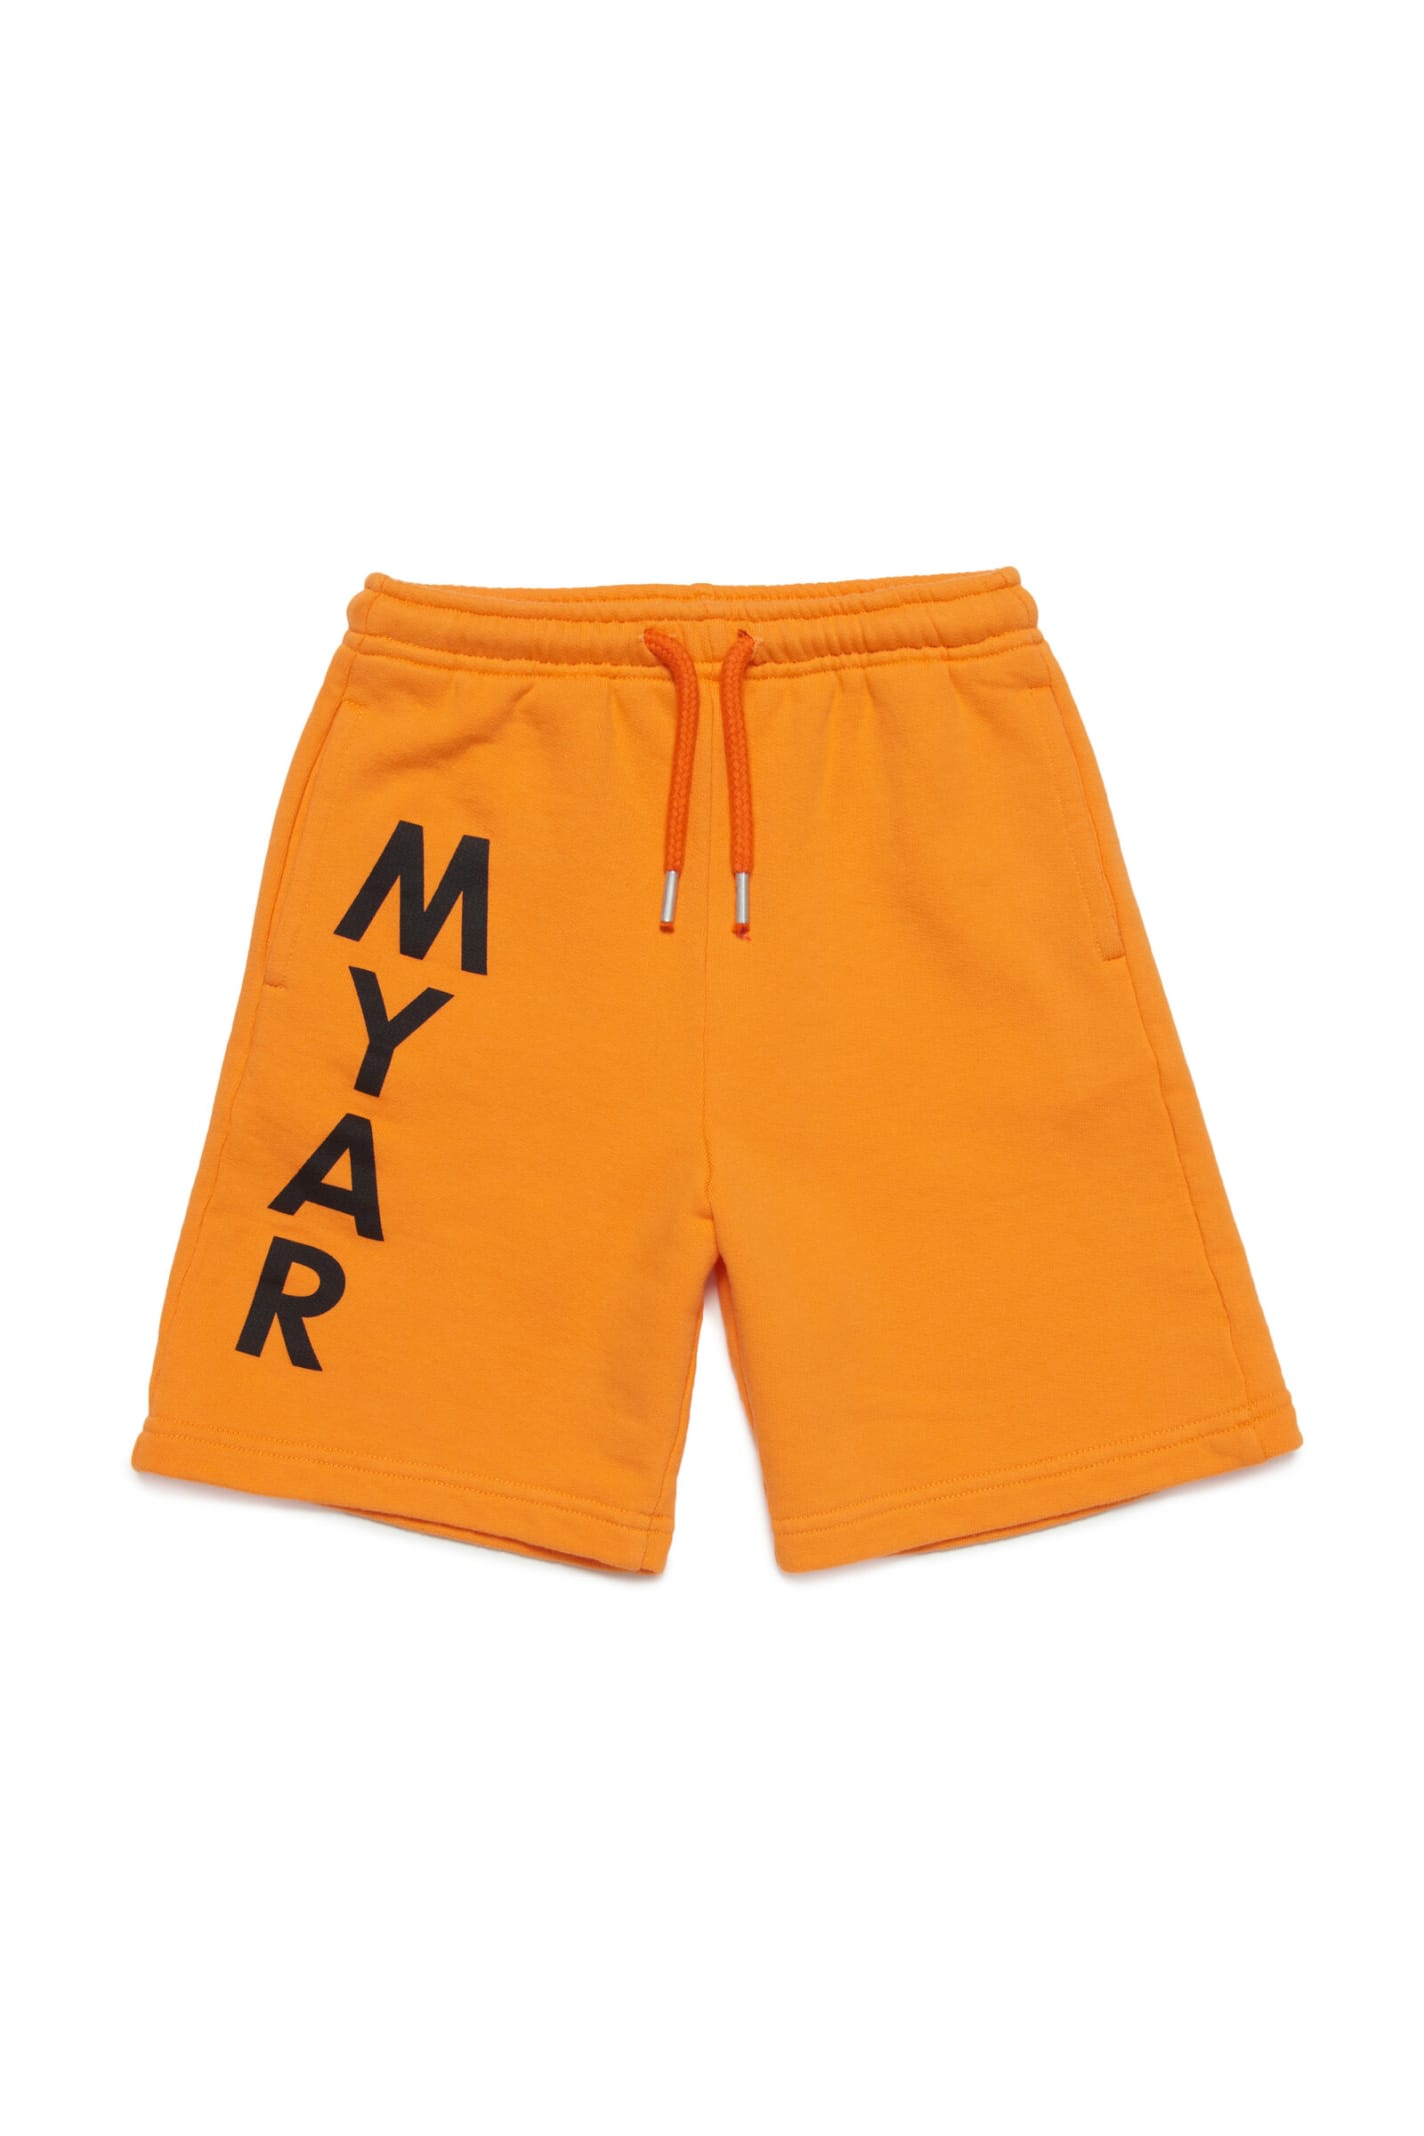 MYAR Myp6u Shorts Myar Deadstock Orange Plush Shorts With Vertical Logo